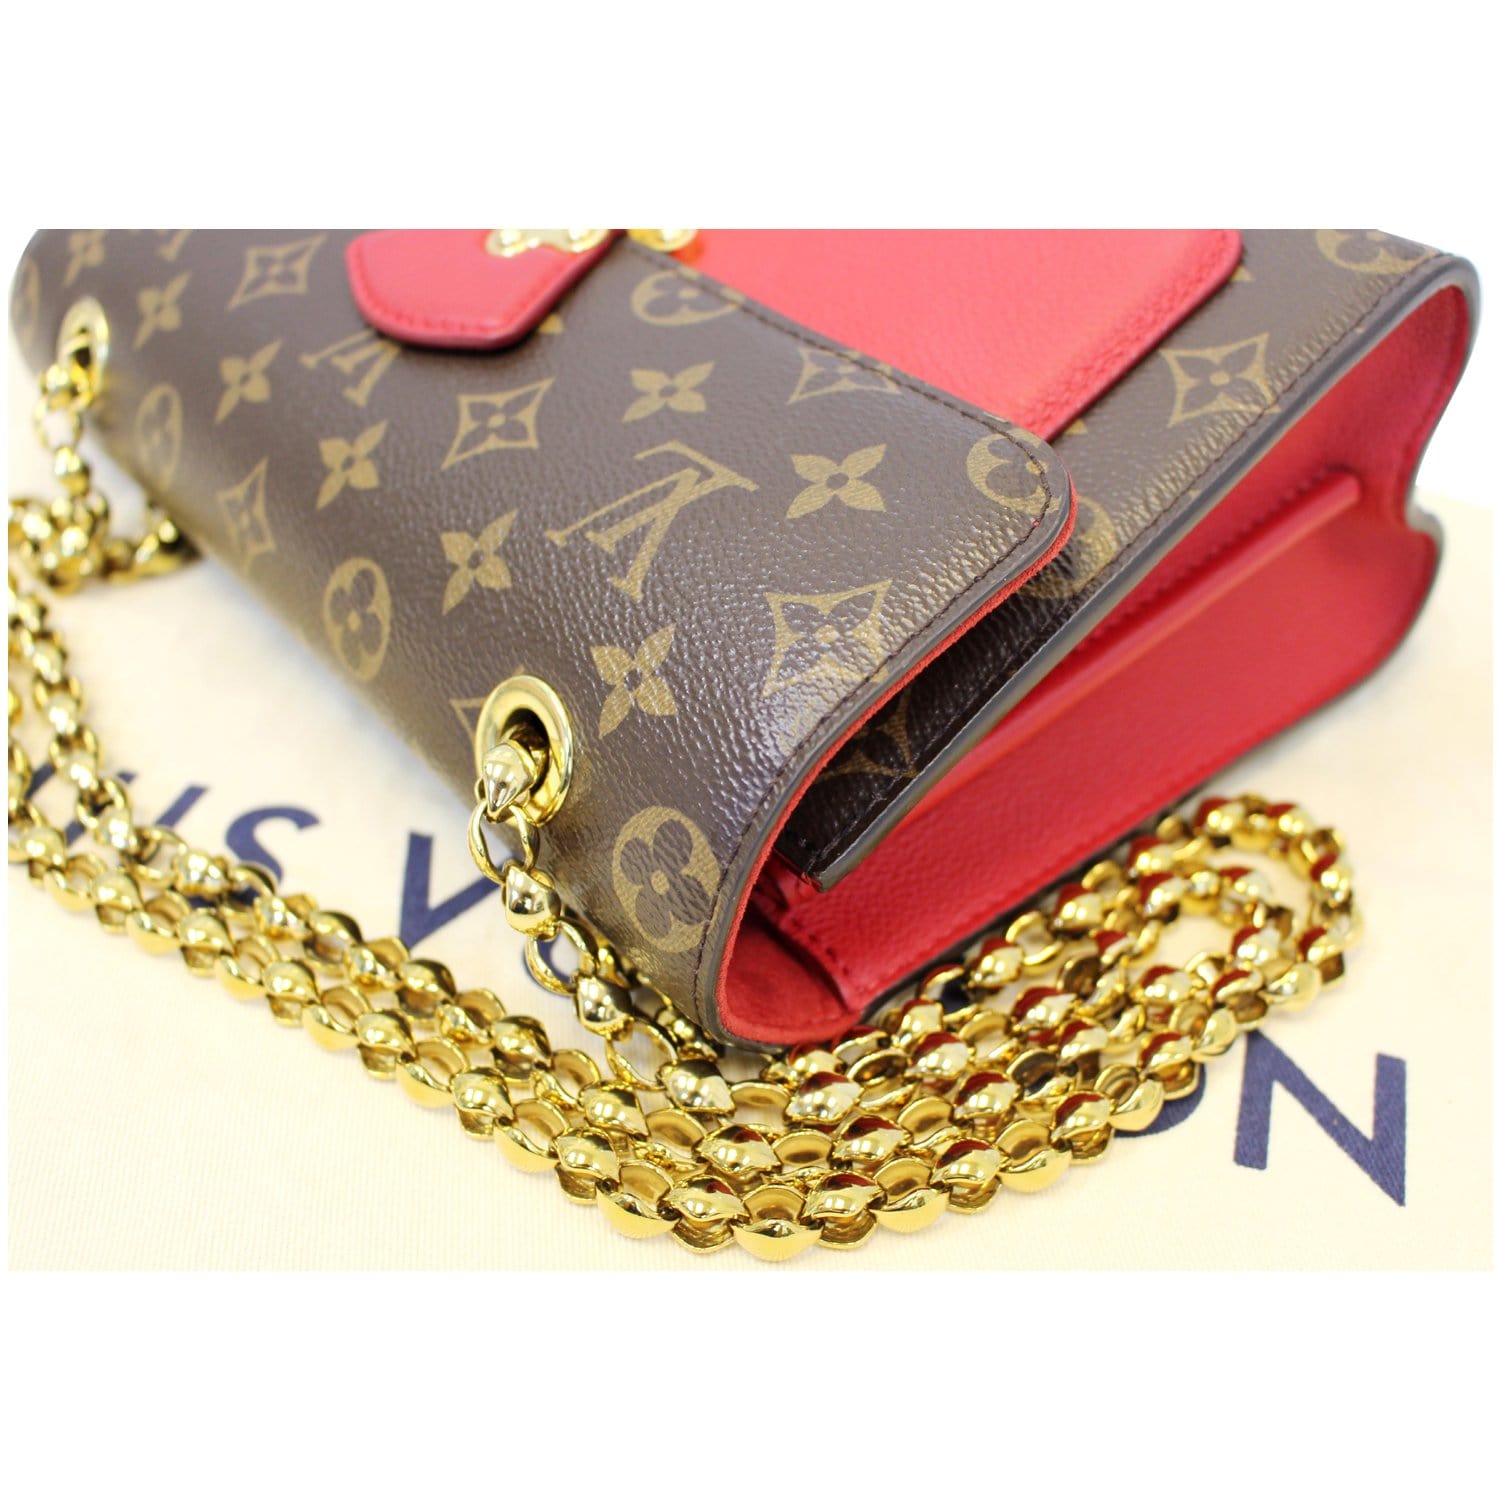 Victoire Monogram – Keeks Designer Handbags